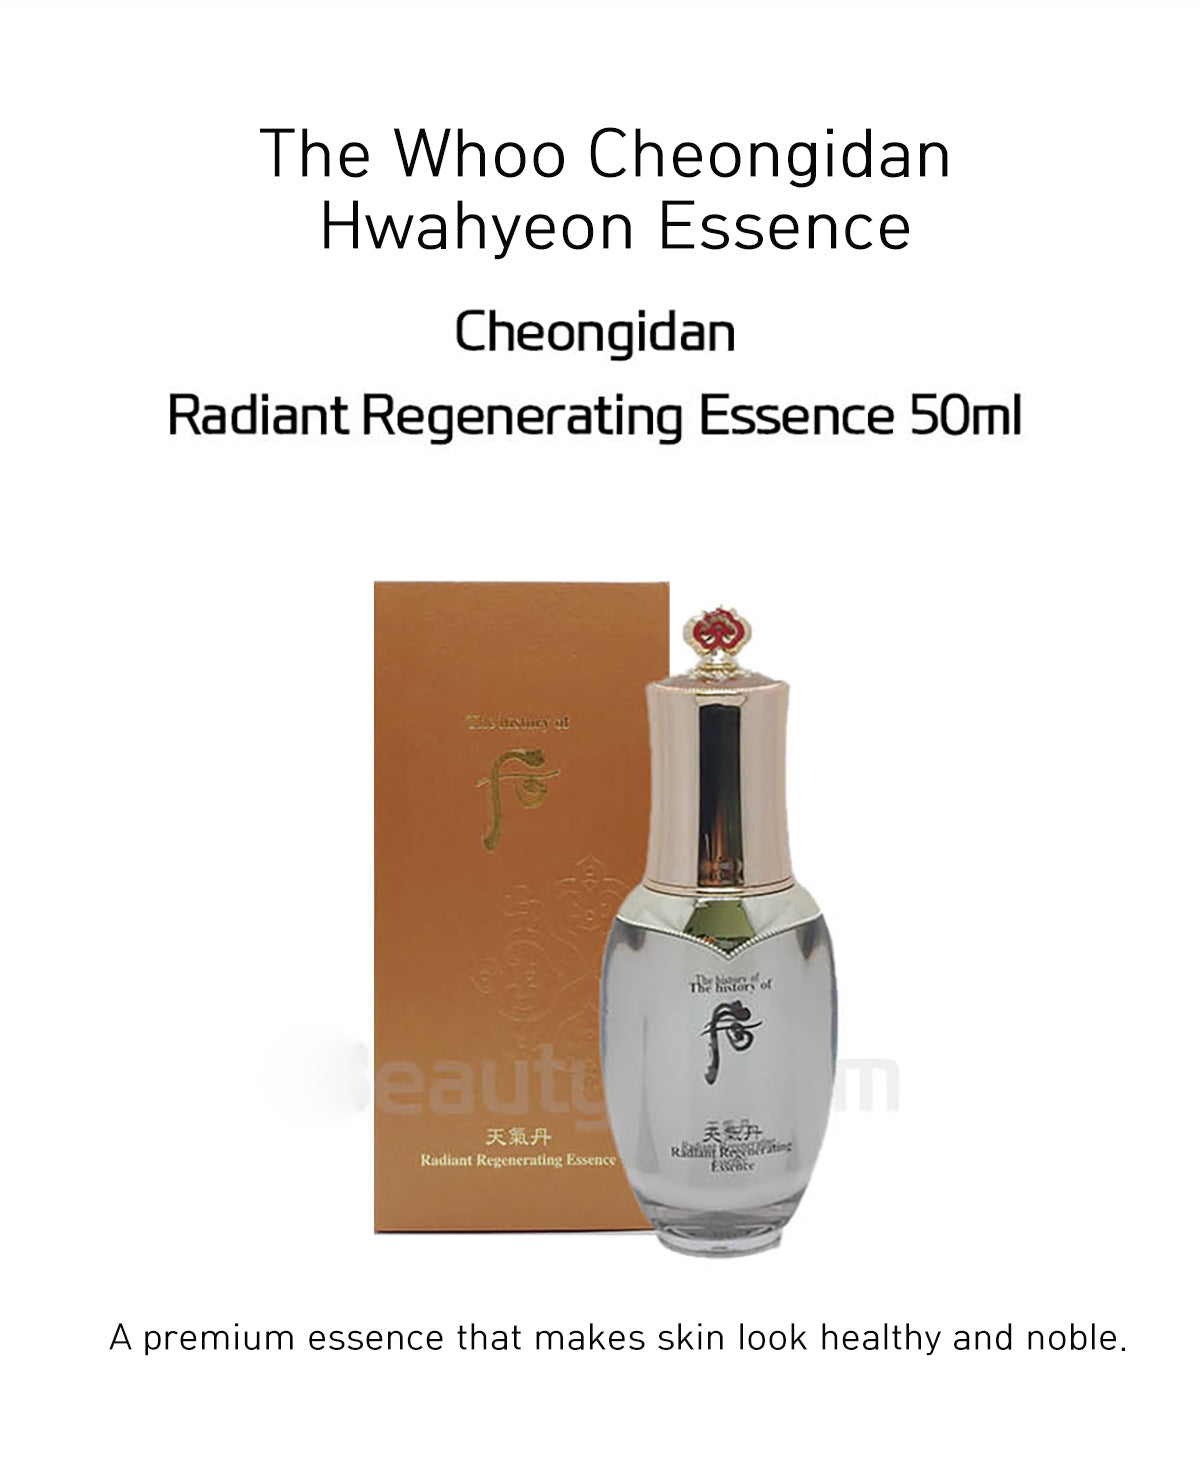 The Whoo Cheongidan Hwahyeon Essence 50ml